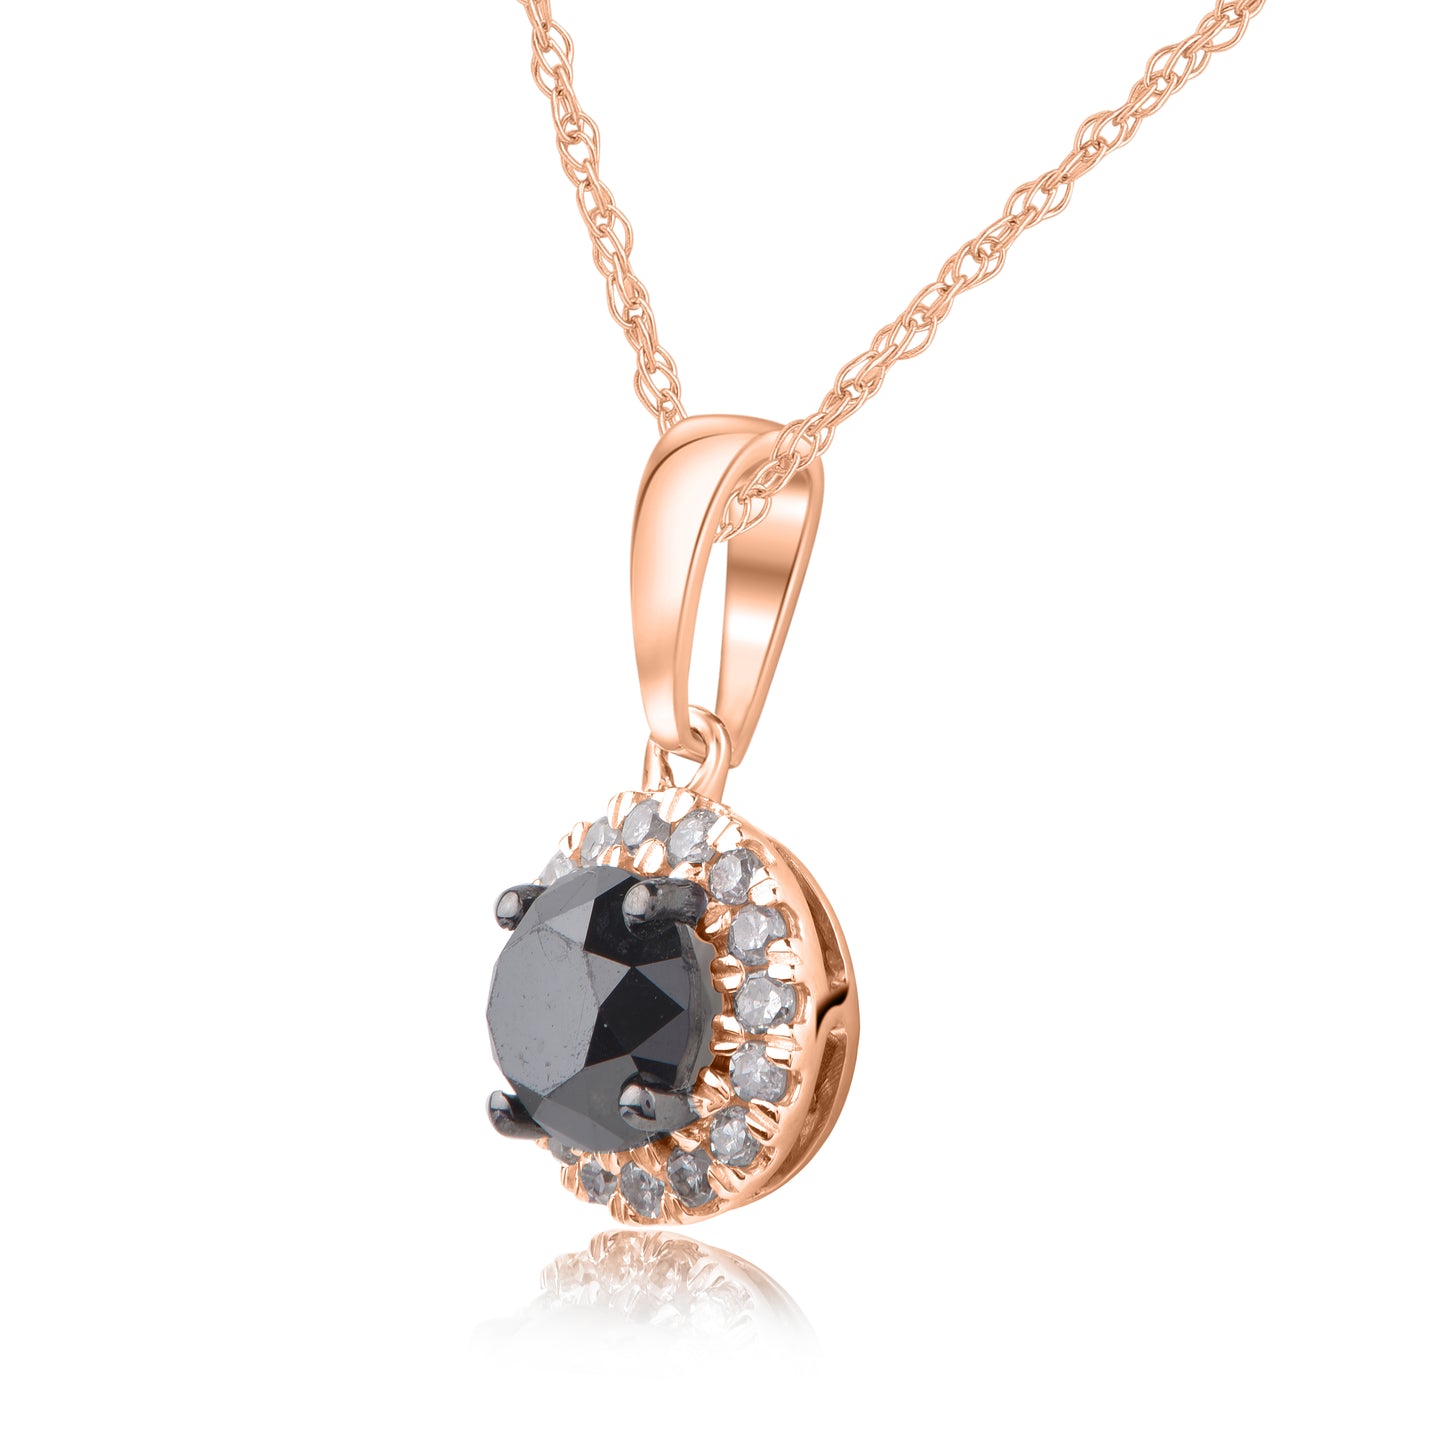 Treated Black Diamond Circular Halo Pendant Necklace 10K Gold